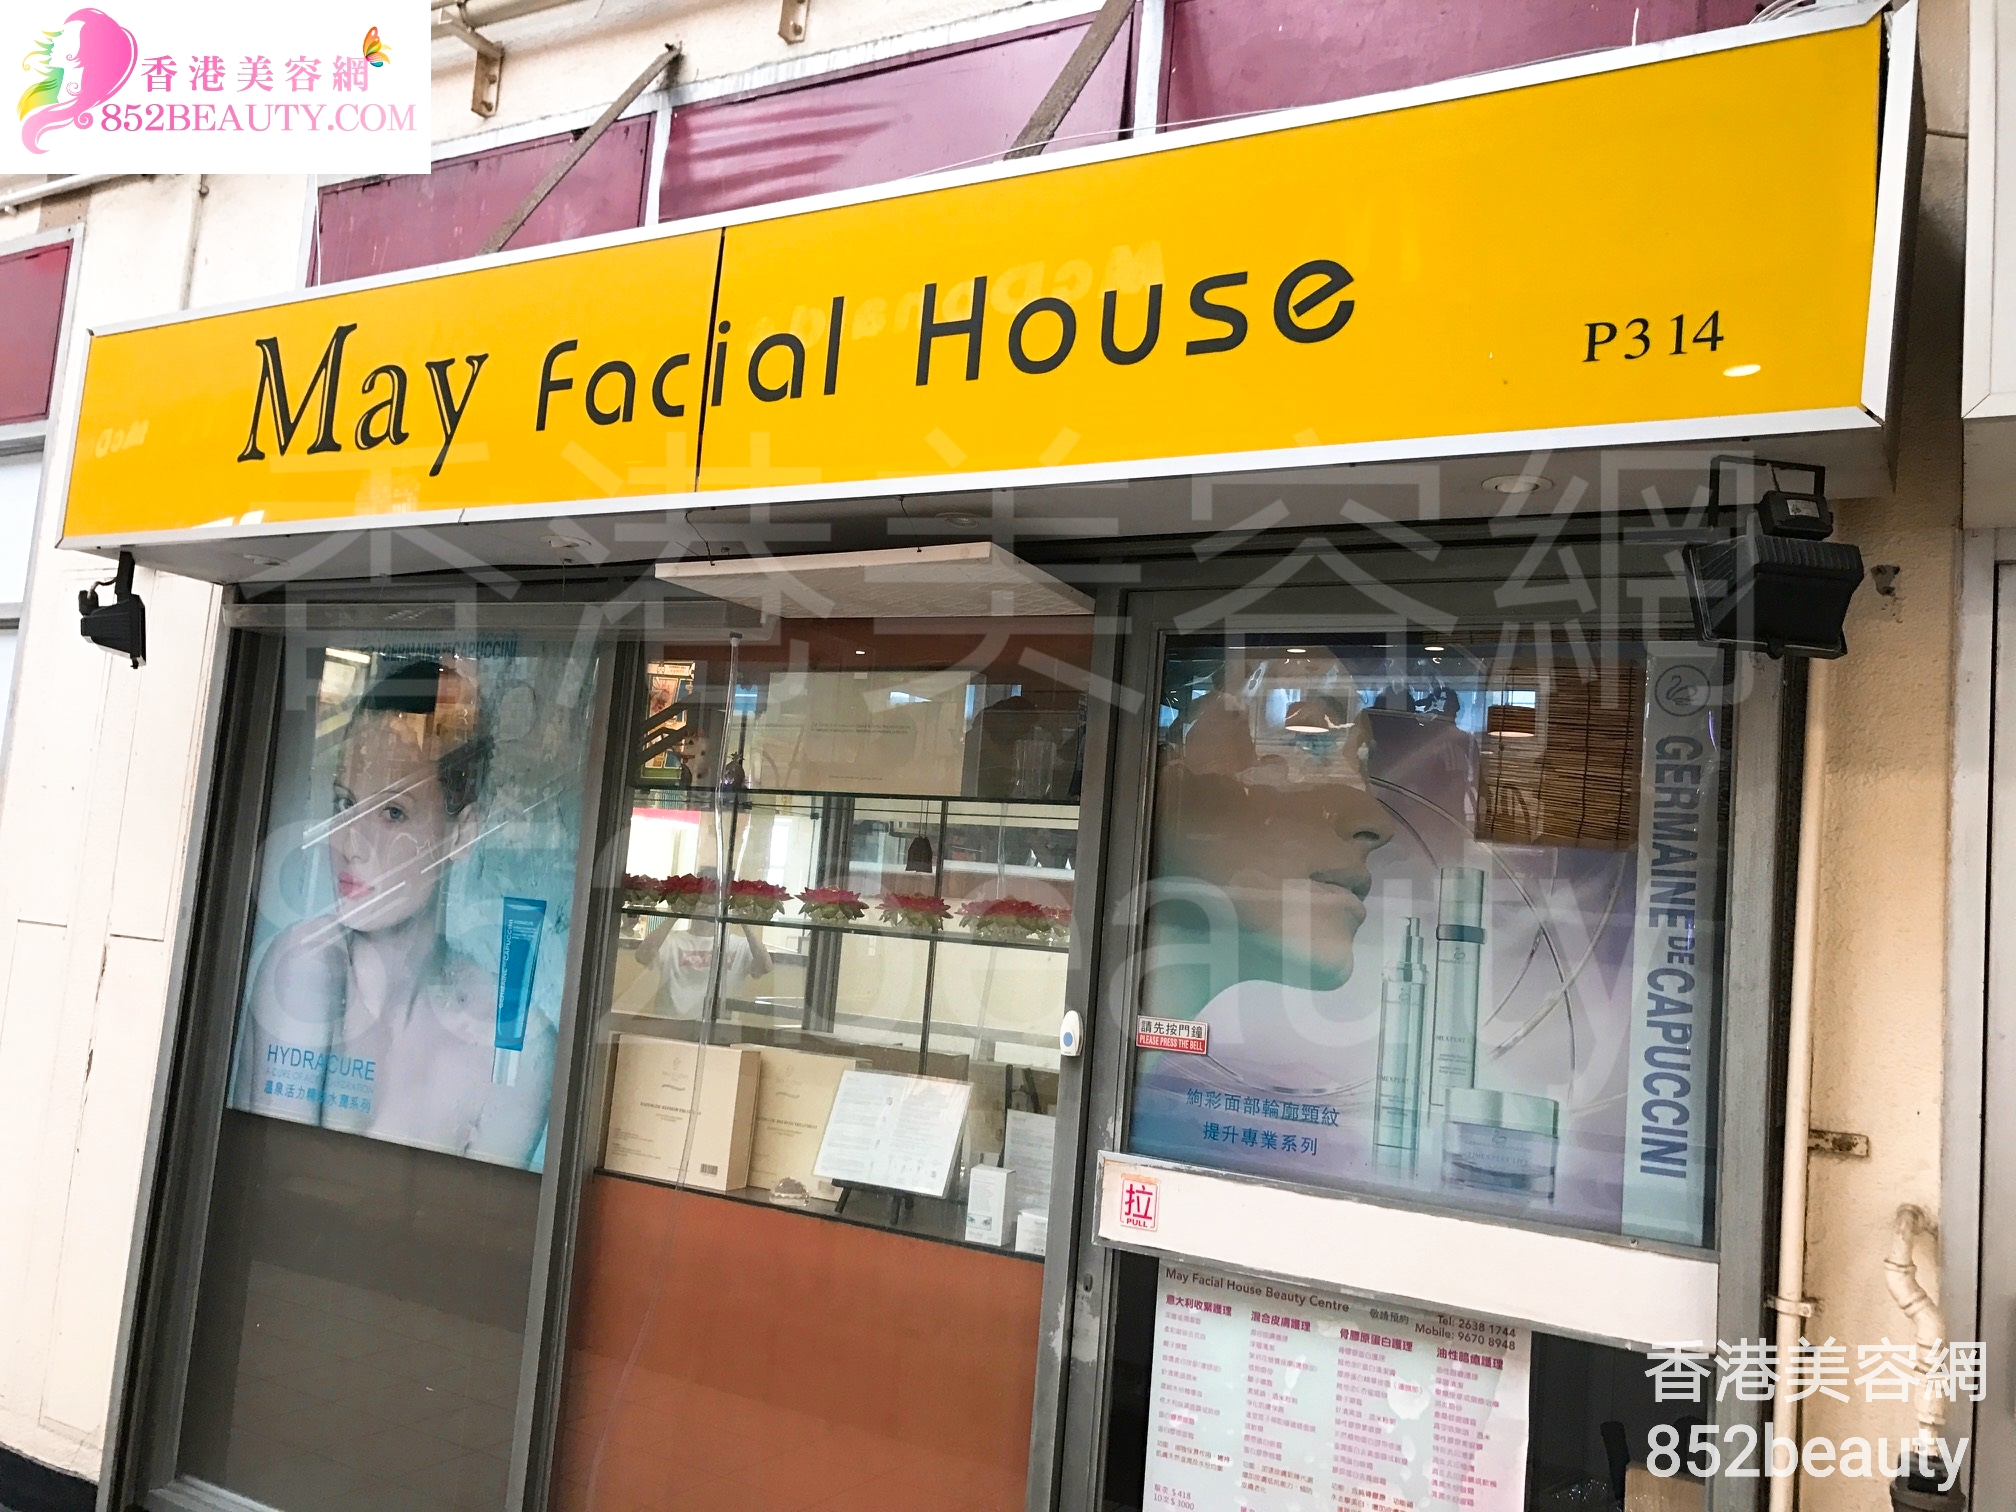 香港美容網 Hong Kong Beauty Salon 美容院 / 美容師: May Facial House